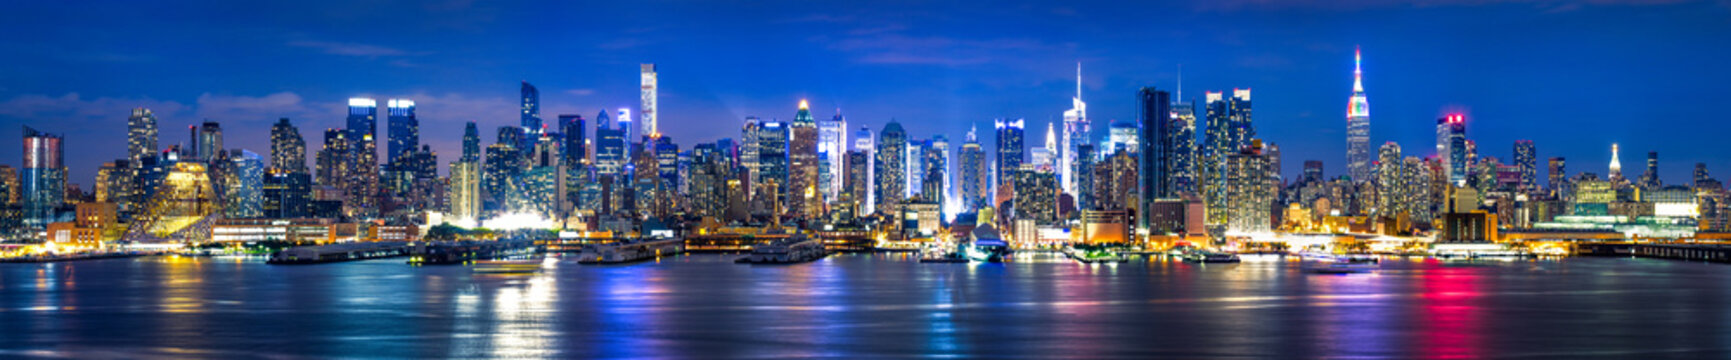 Manhattan Skyline bei Nacht, New York City, USA